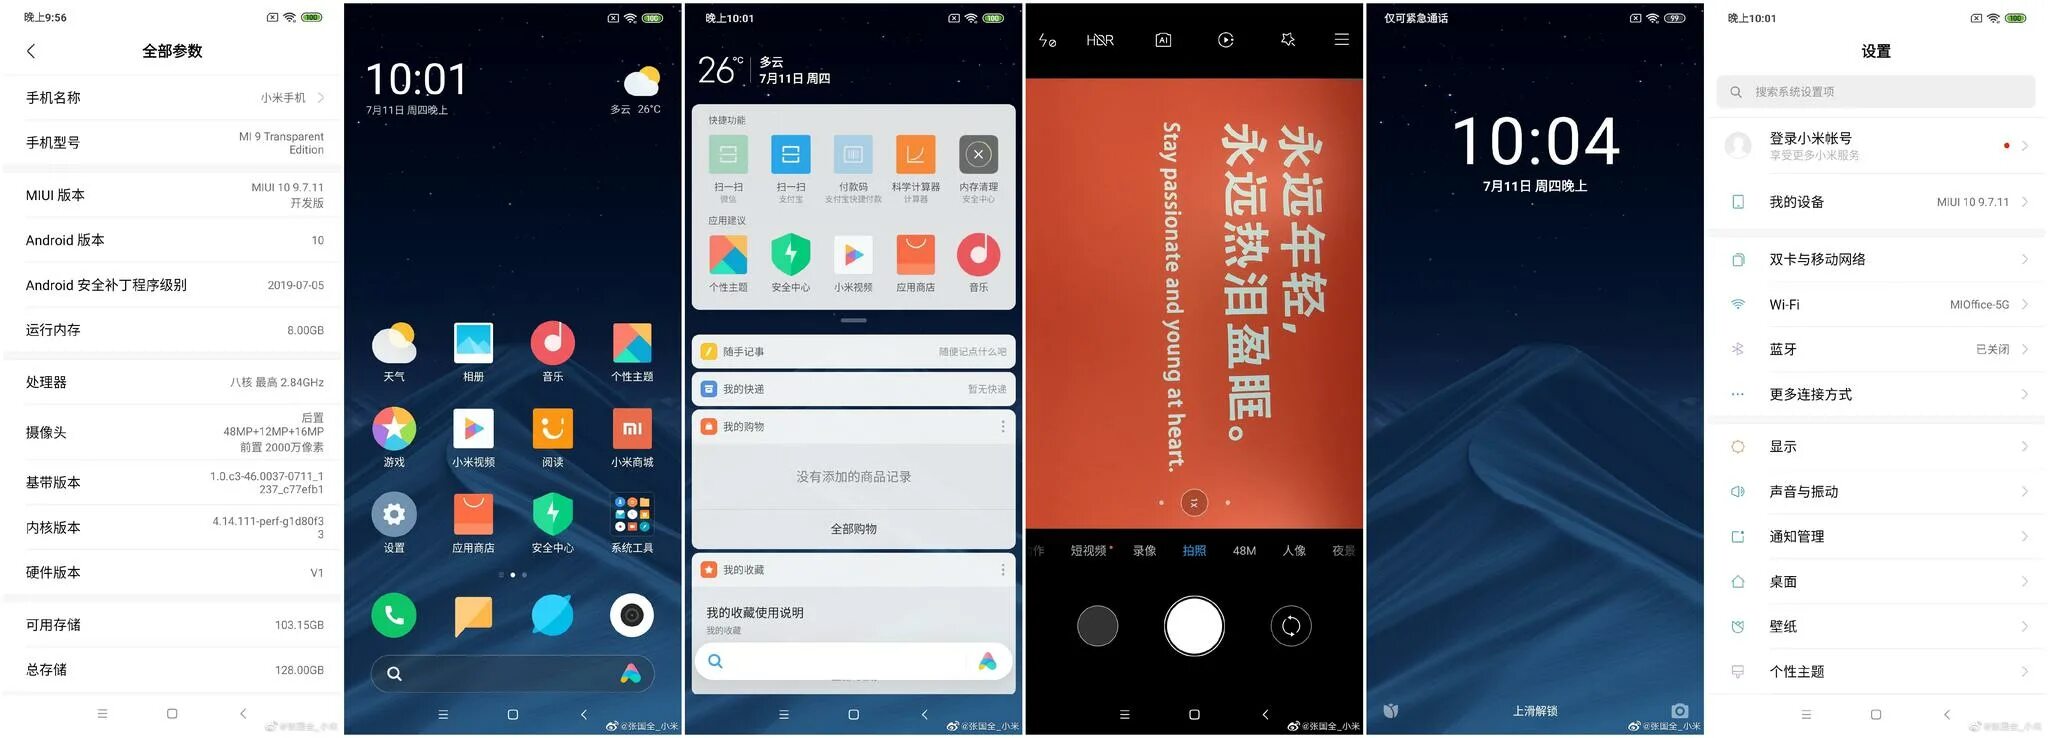 Xiaomi mi 9 прошивка. Android-прошивки MIUI. MIUI Скриншоты. Скриншот андроид 11 на Xiaomi. Интерфейс Сяоми.